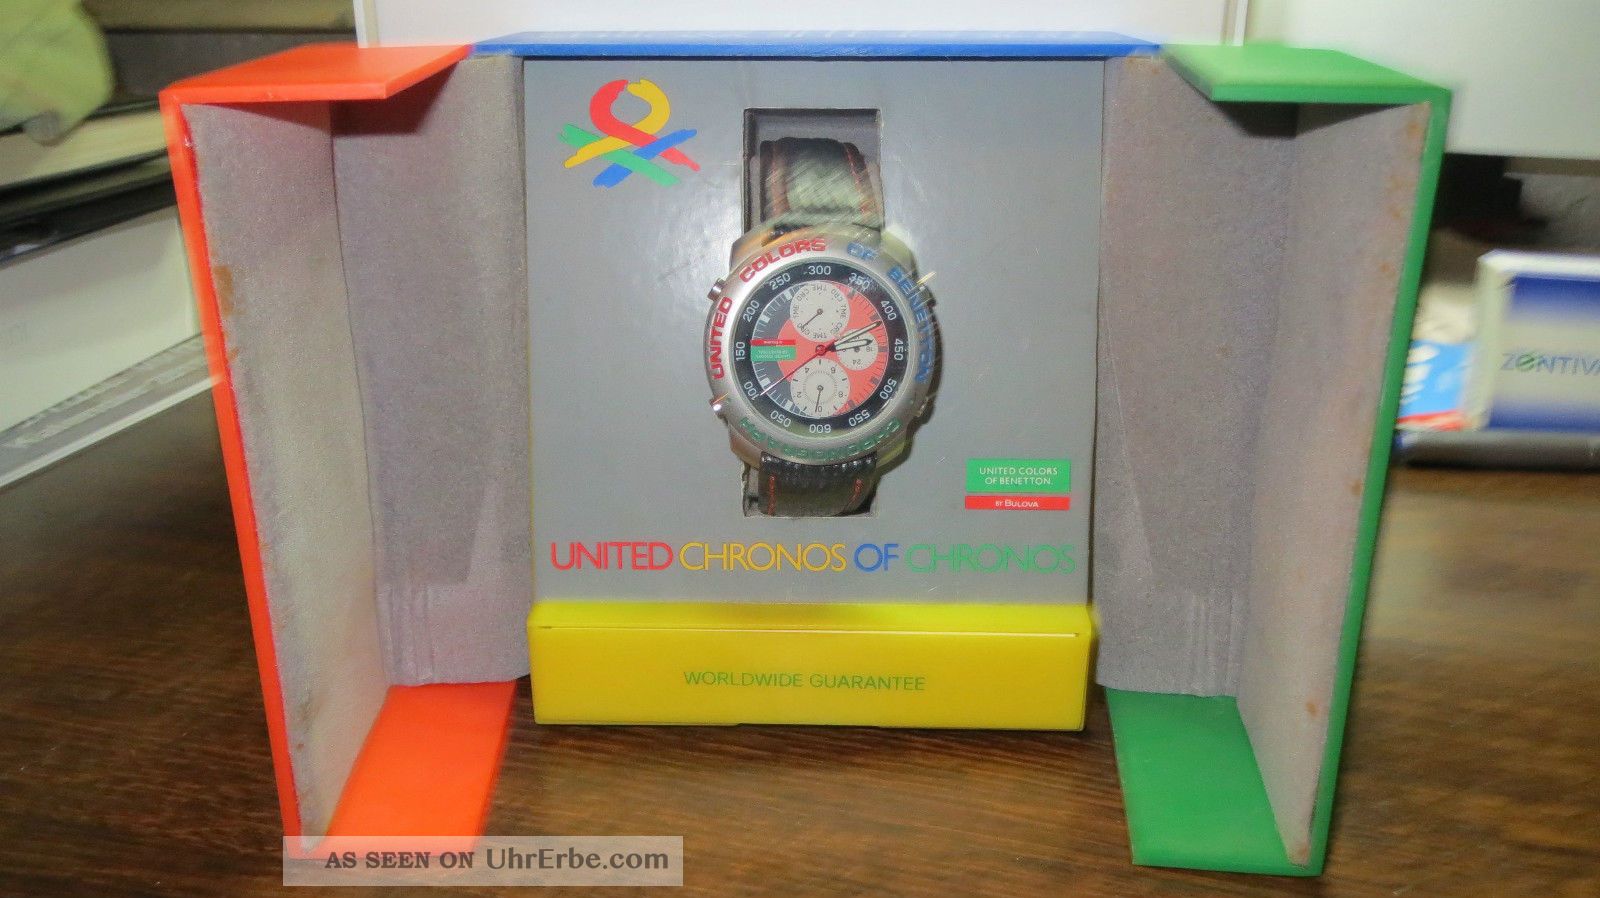 Unitet Colors Of Benetton Durchmesser 42 Mm Modell Bn103 Von Bulova Armbanduhren Bild